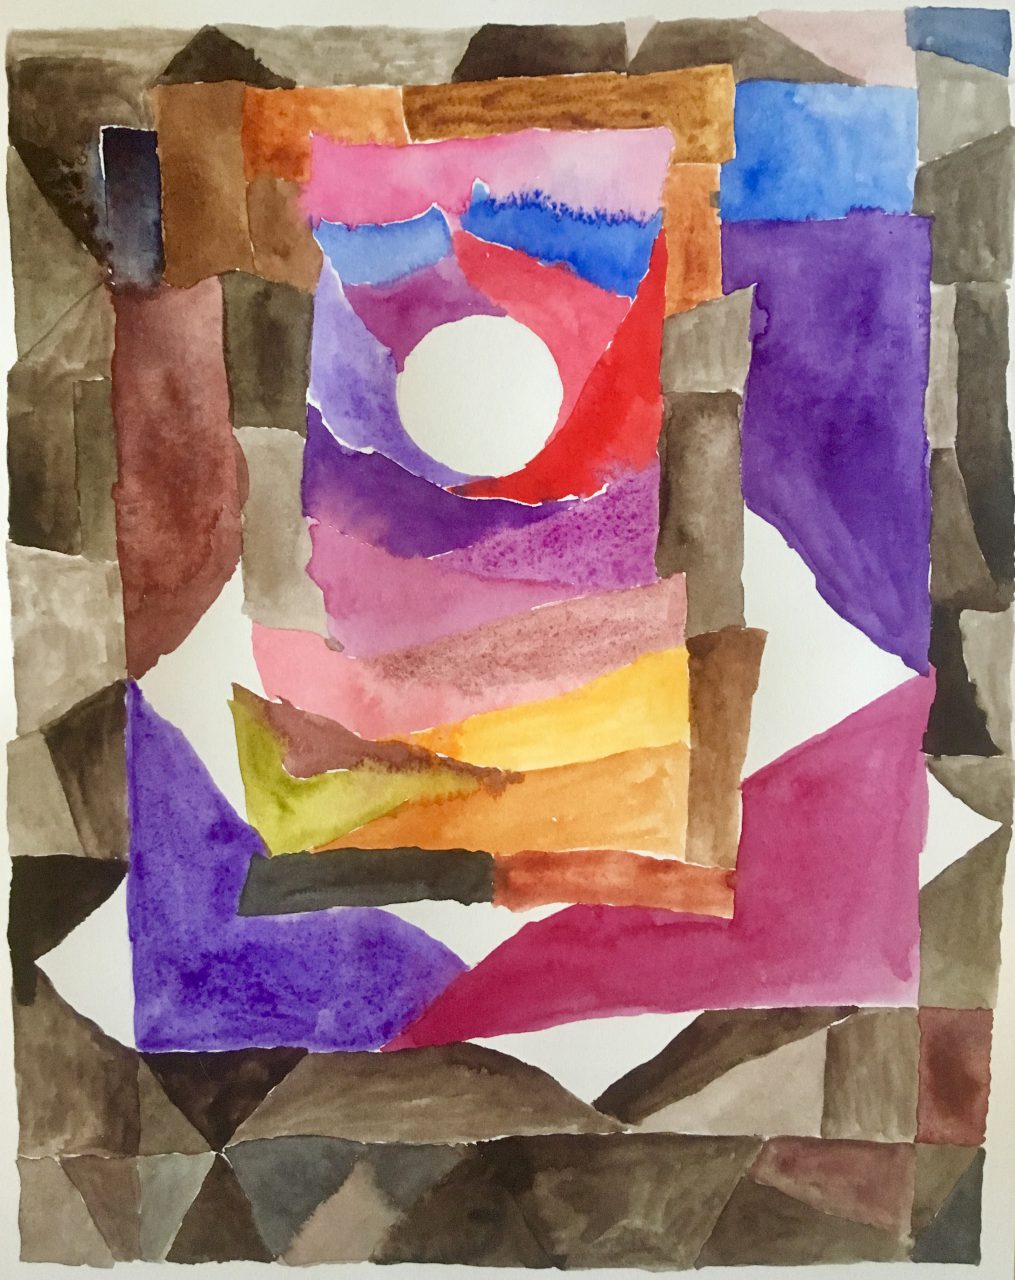 moonmountain, rising, watercolour on paper, 2019